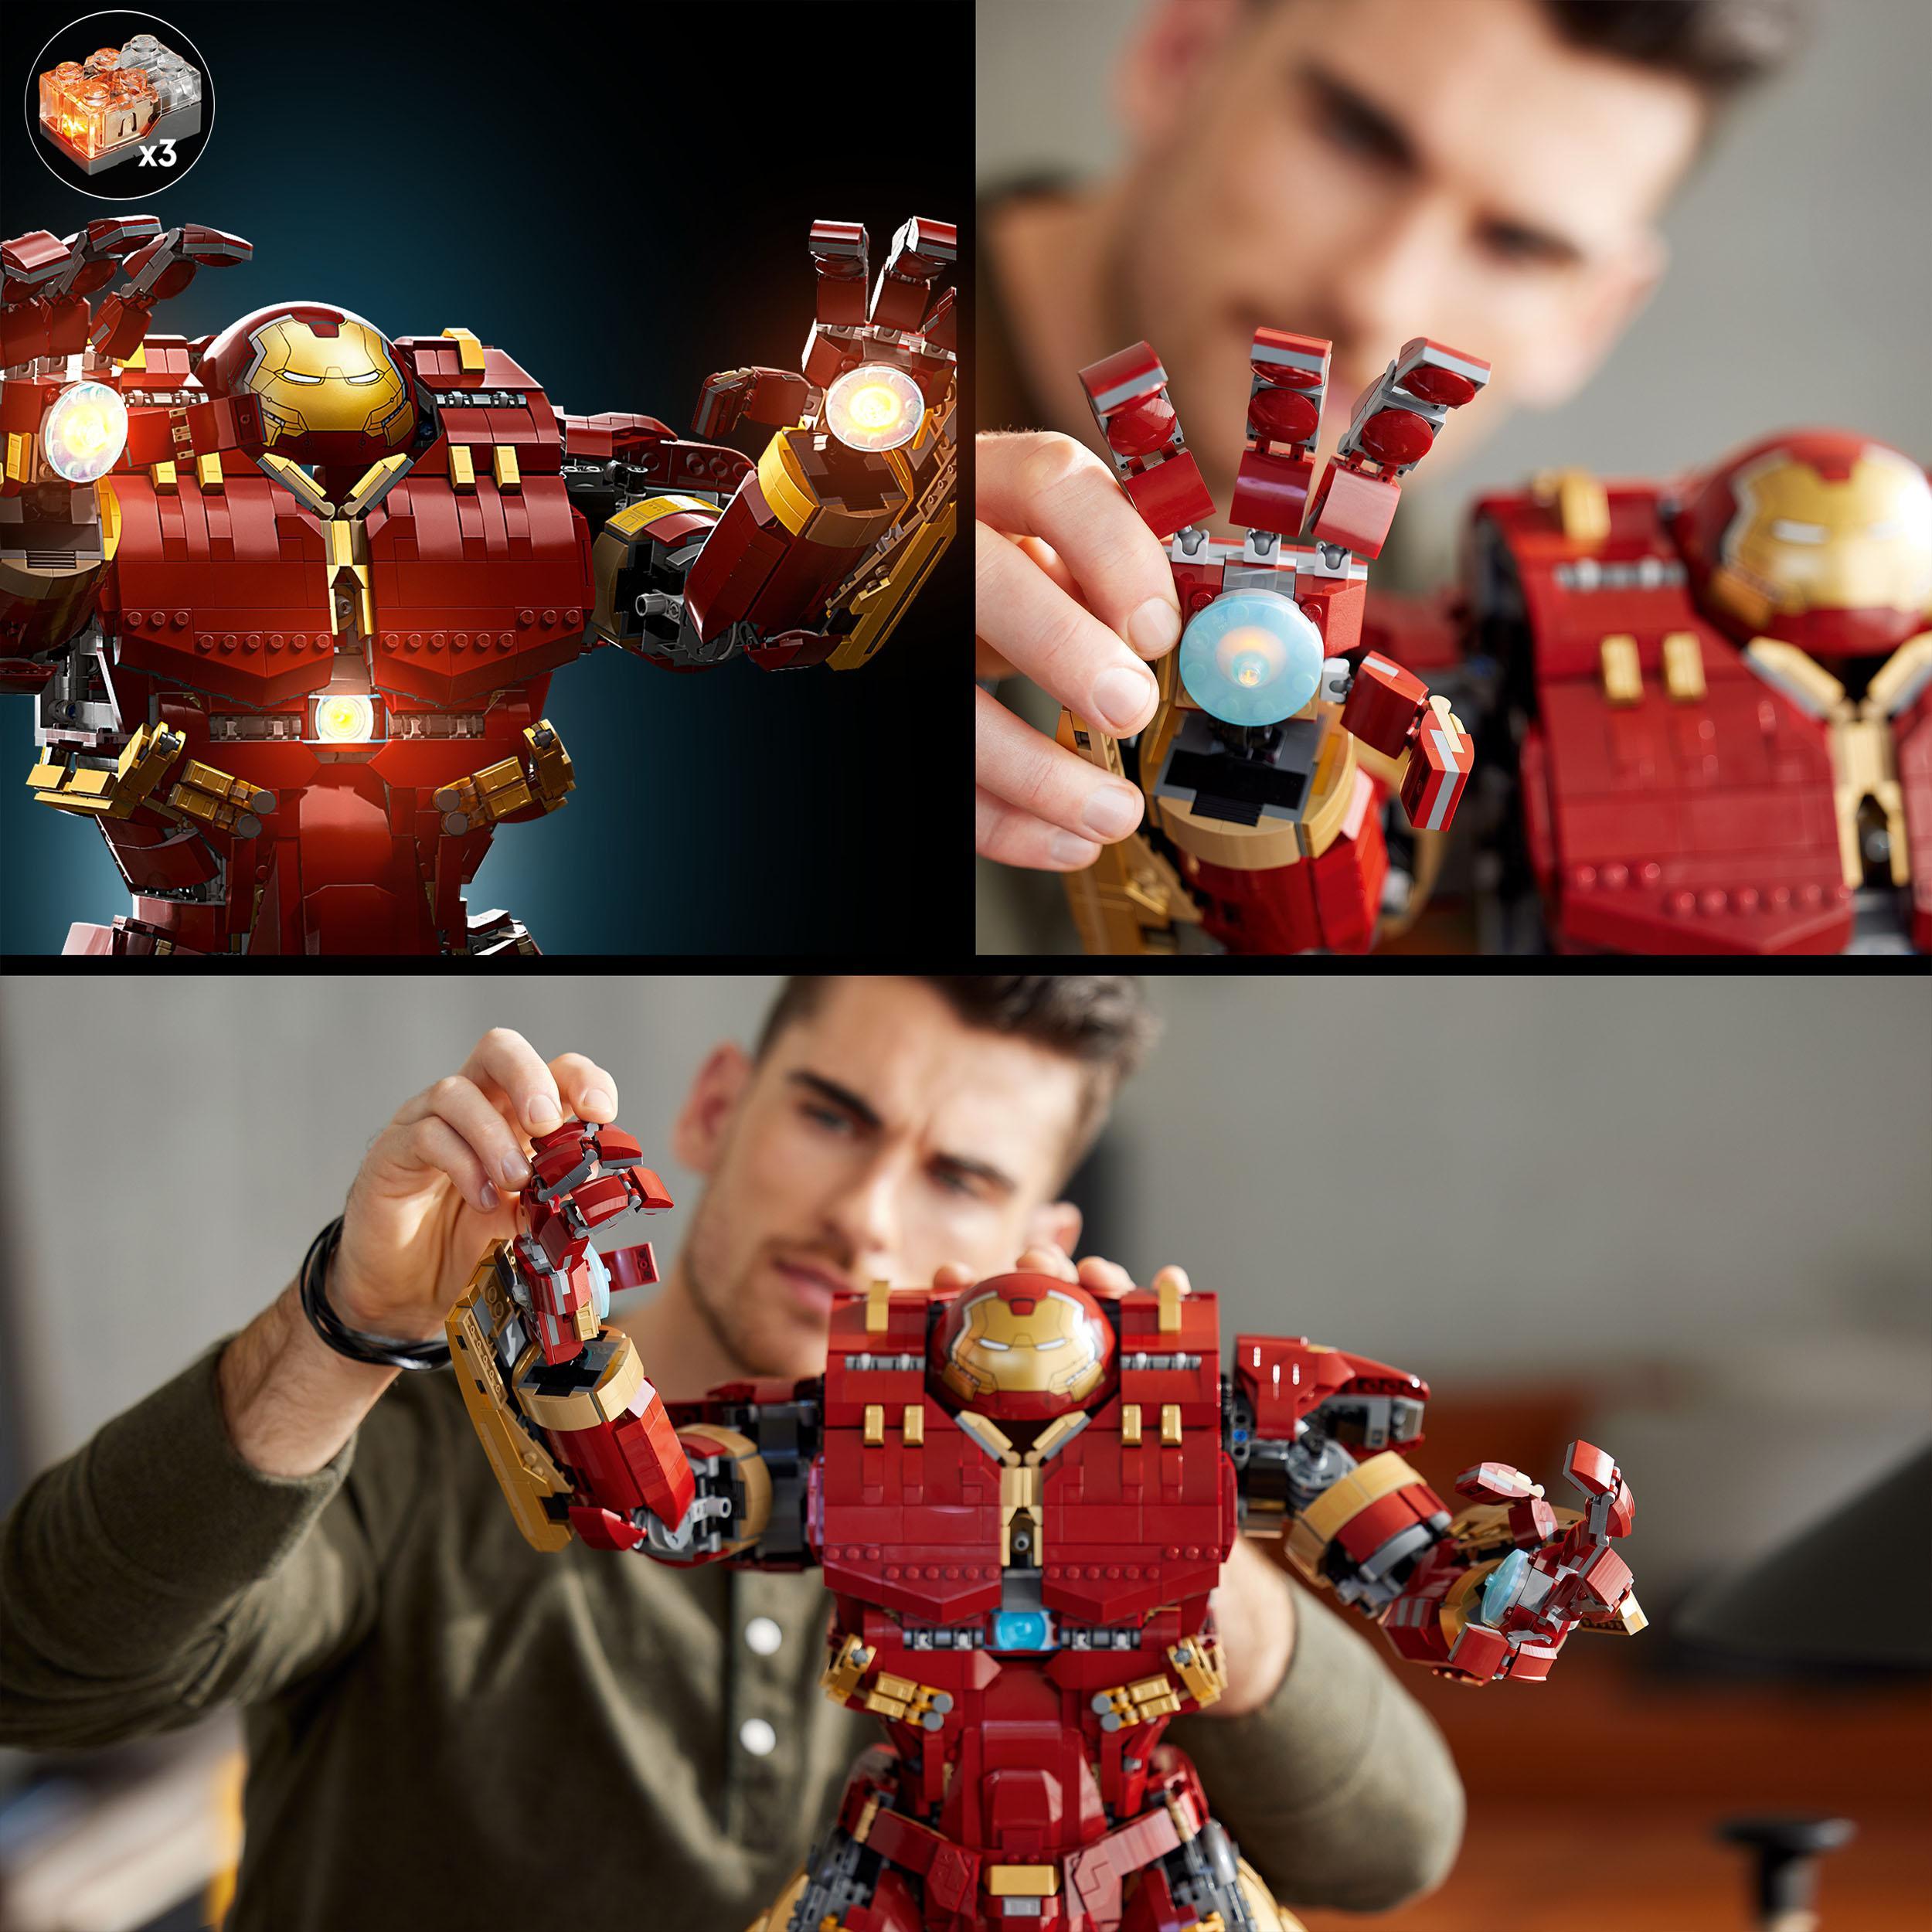 Lego marvel 76210 hulkbuster, grande mech mk44 del supereroe iron man da avengers age of ultron con minifigure di tony stark - LEGO SUPER HEROES, Avengers